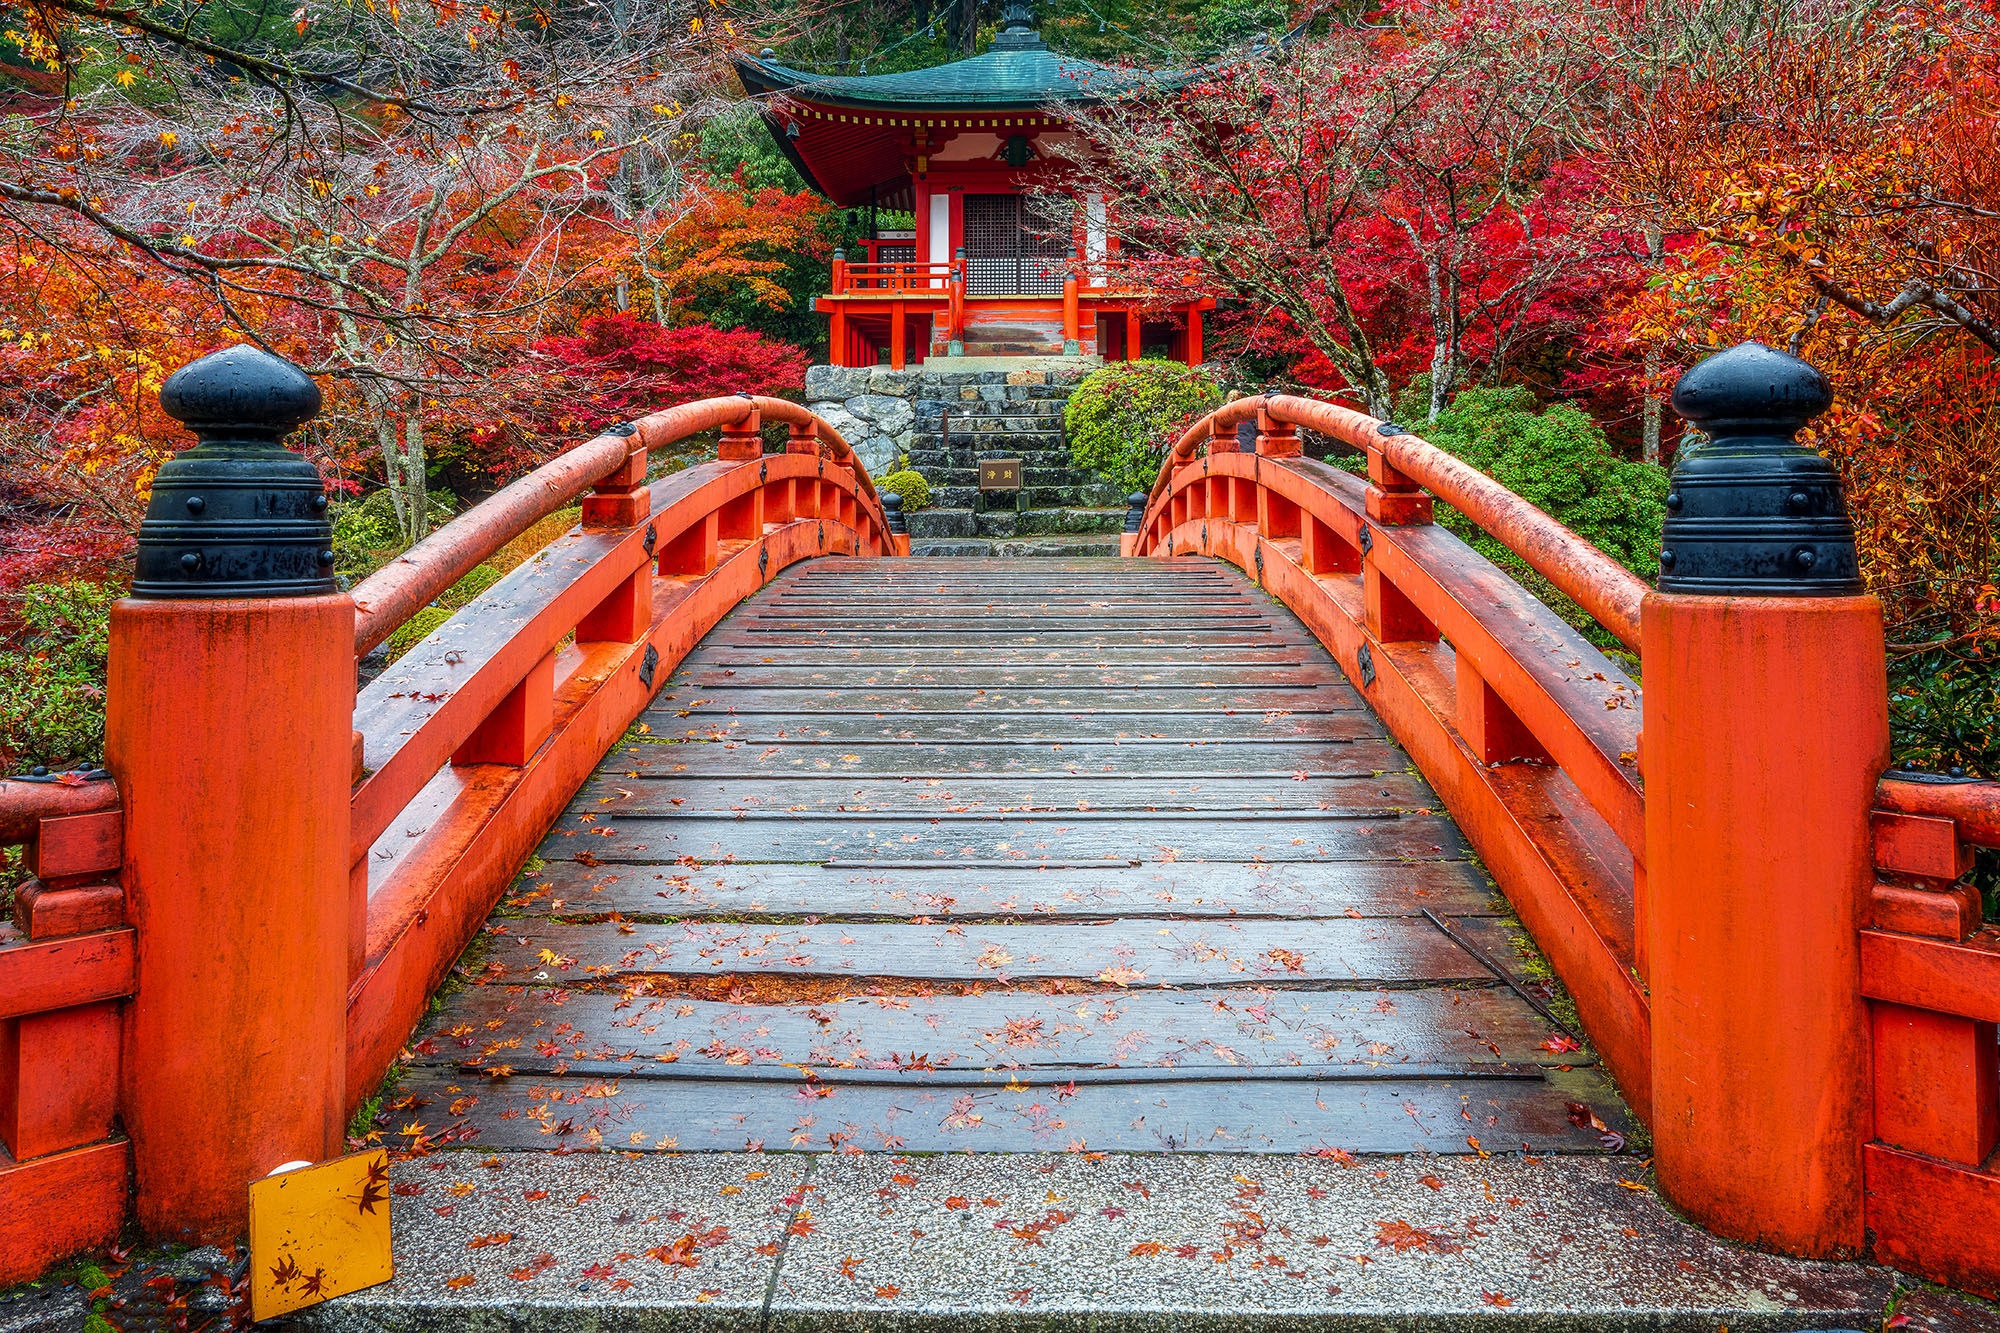 Amidst the vibrant autumn foliage, Daigo-ji Temple's main bridge beckons visitors into a world of color and culture. This image...